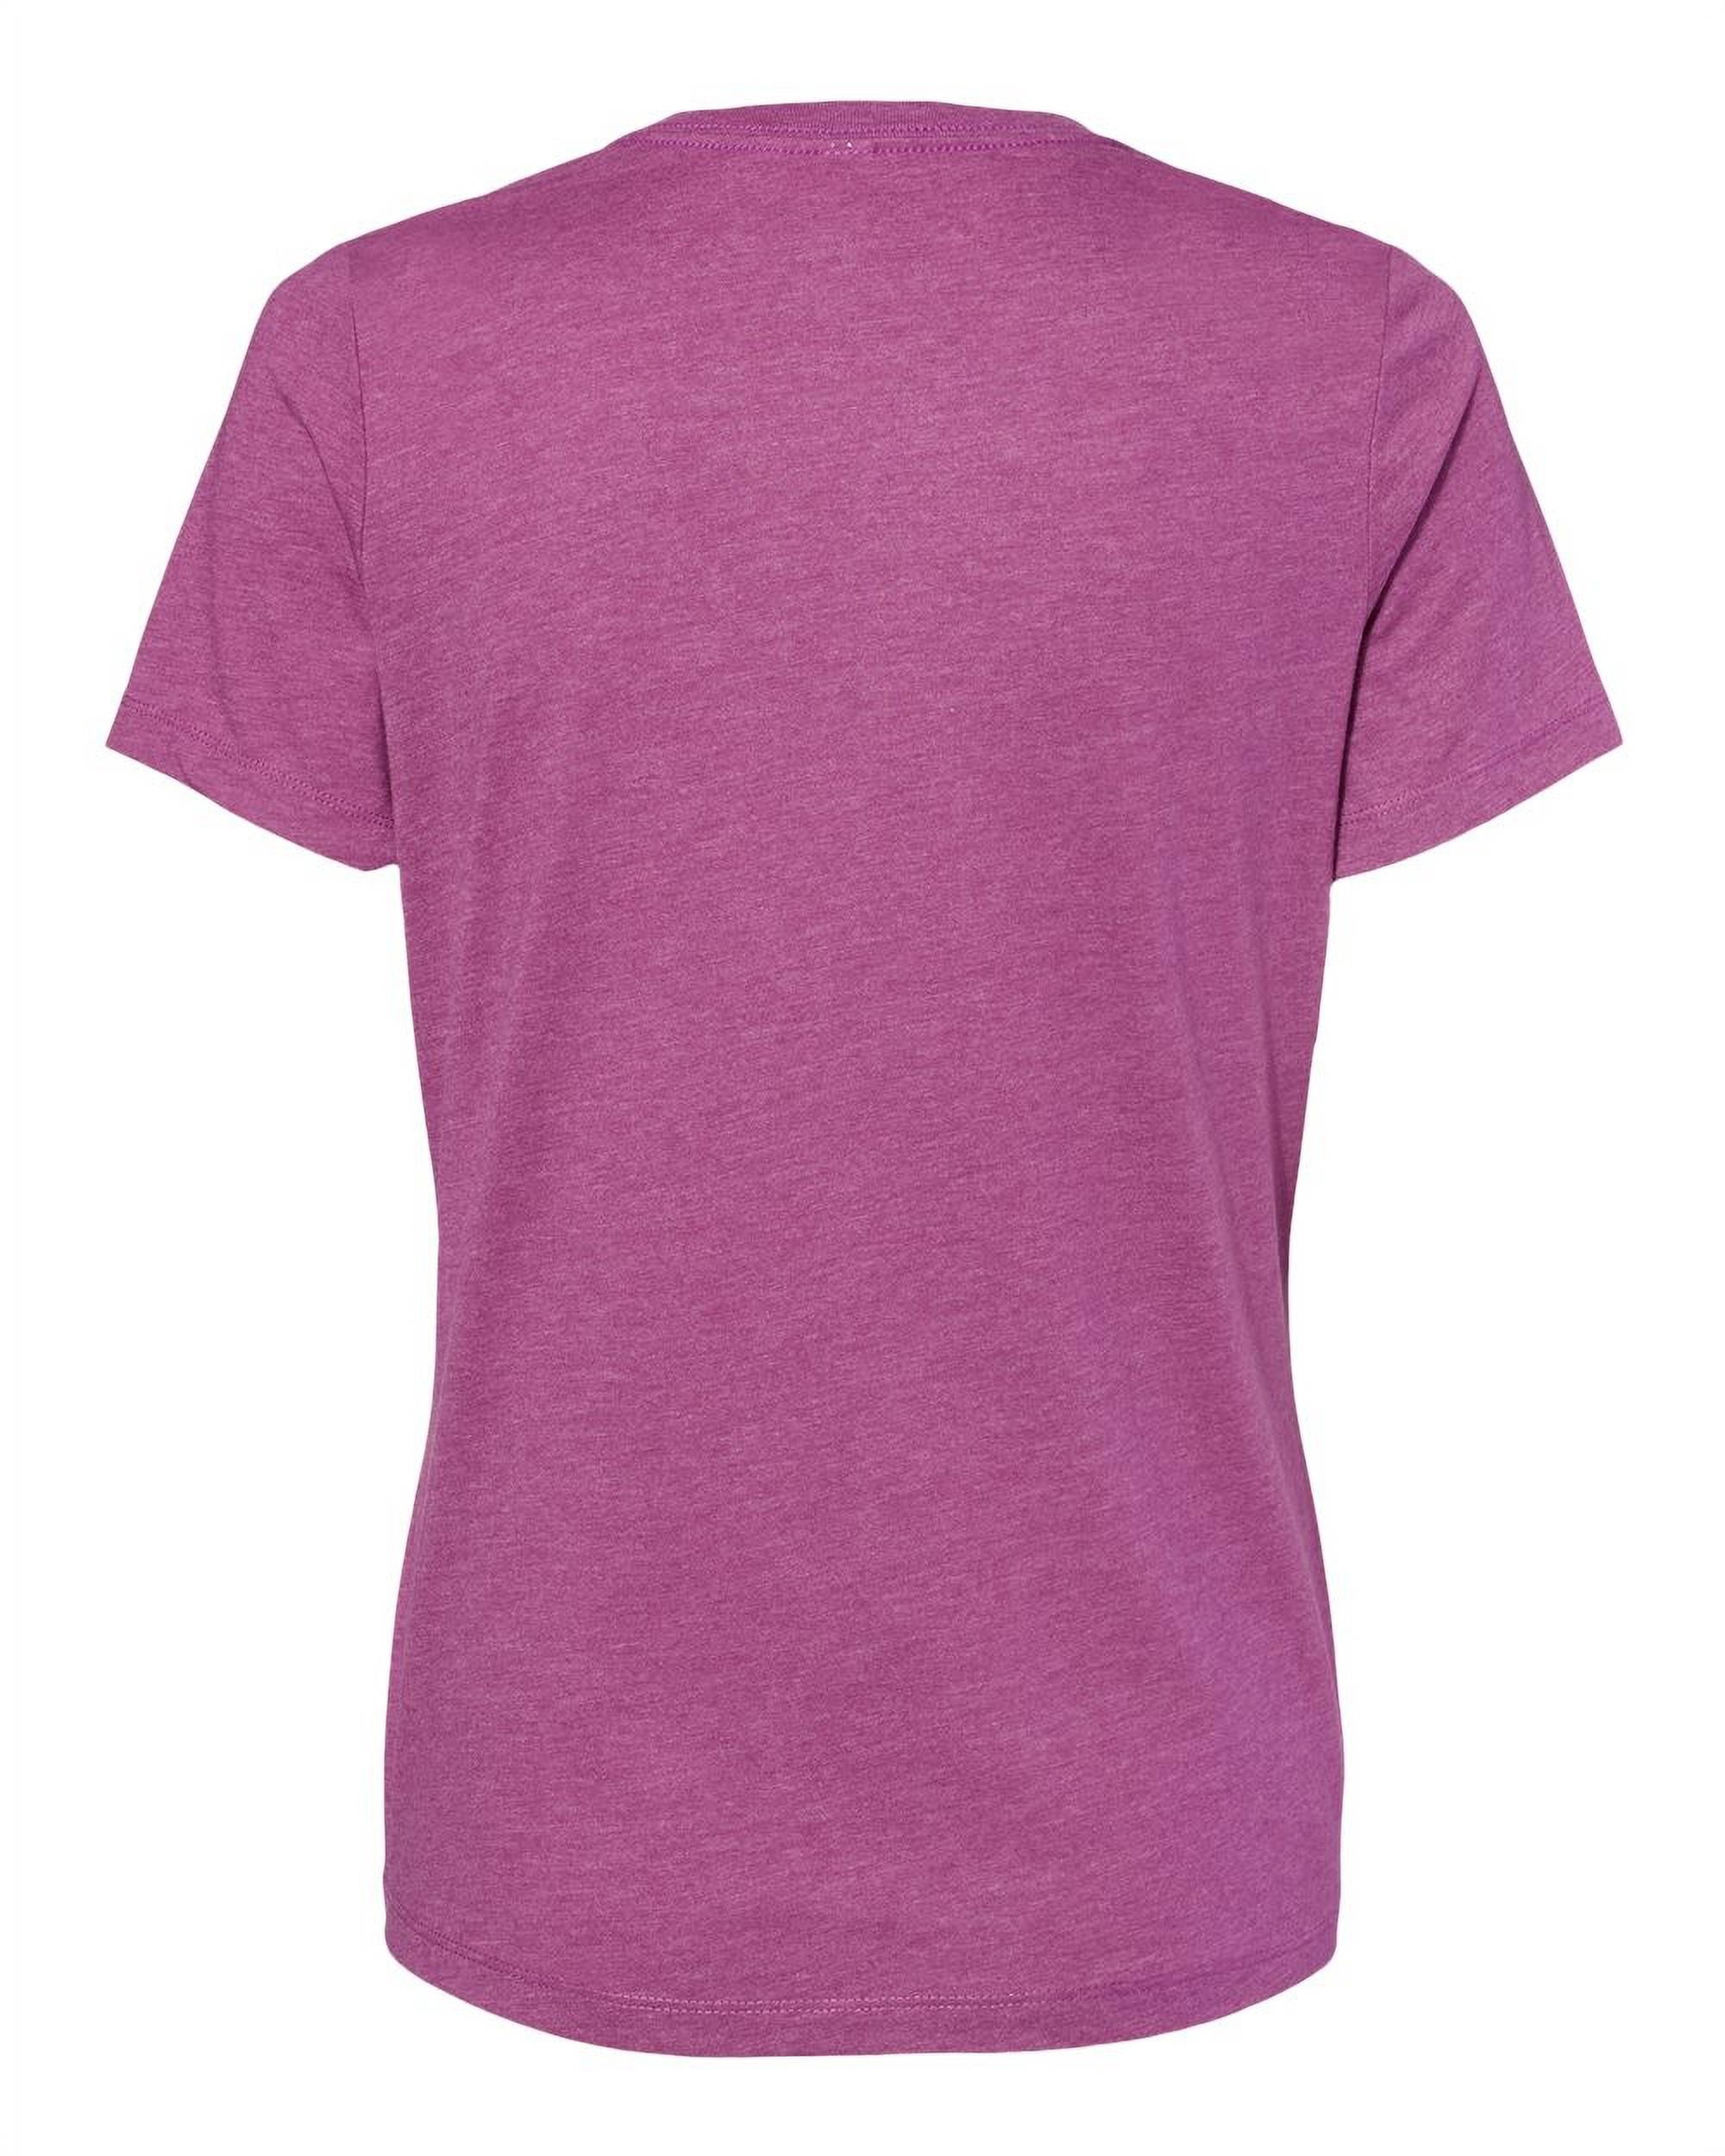 Ladies\' Relaxed Heather CVC Short-Sleeve T-Shirt - HEATHER MAUVE - XL